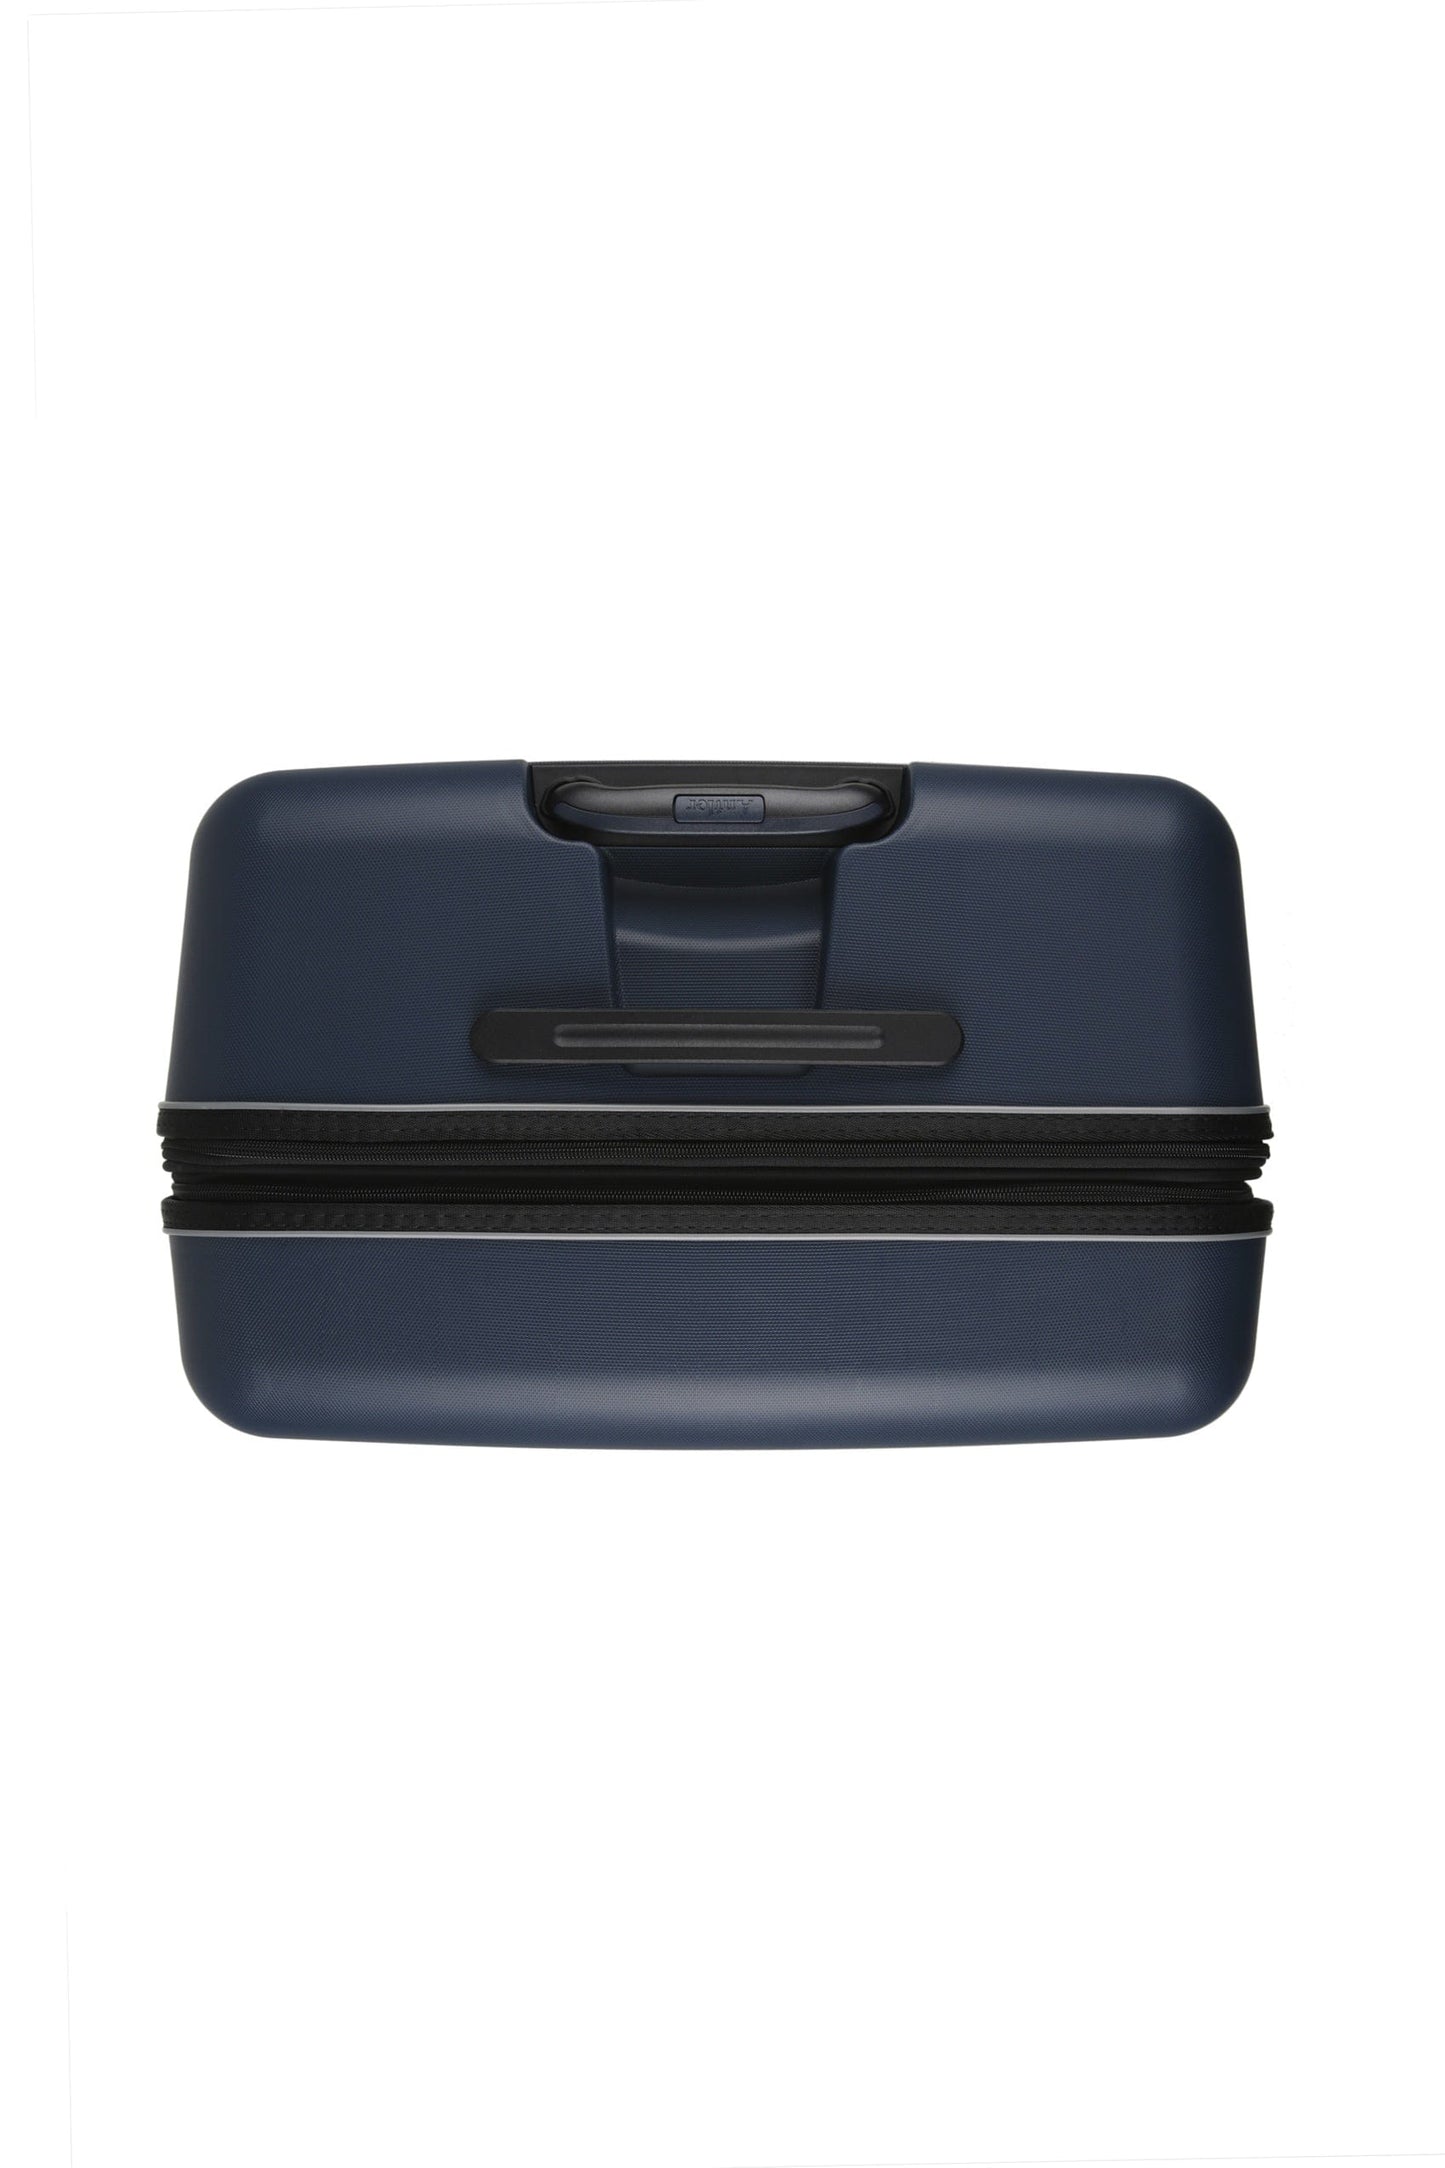 Antler Luggage -  Lincoln large in navy - Hard Suitcase Lincoln Large Suitcase Navy | Hard Suitcase | Antler UK